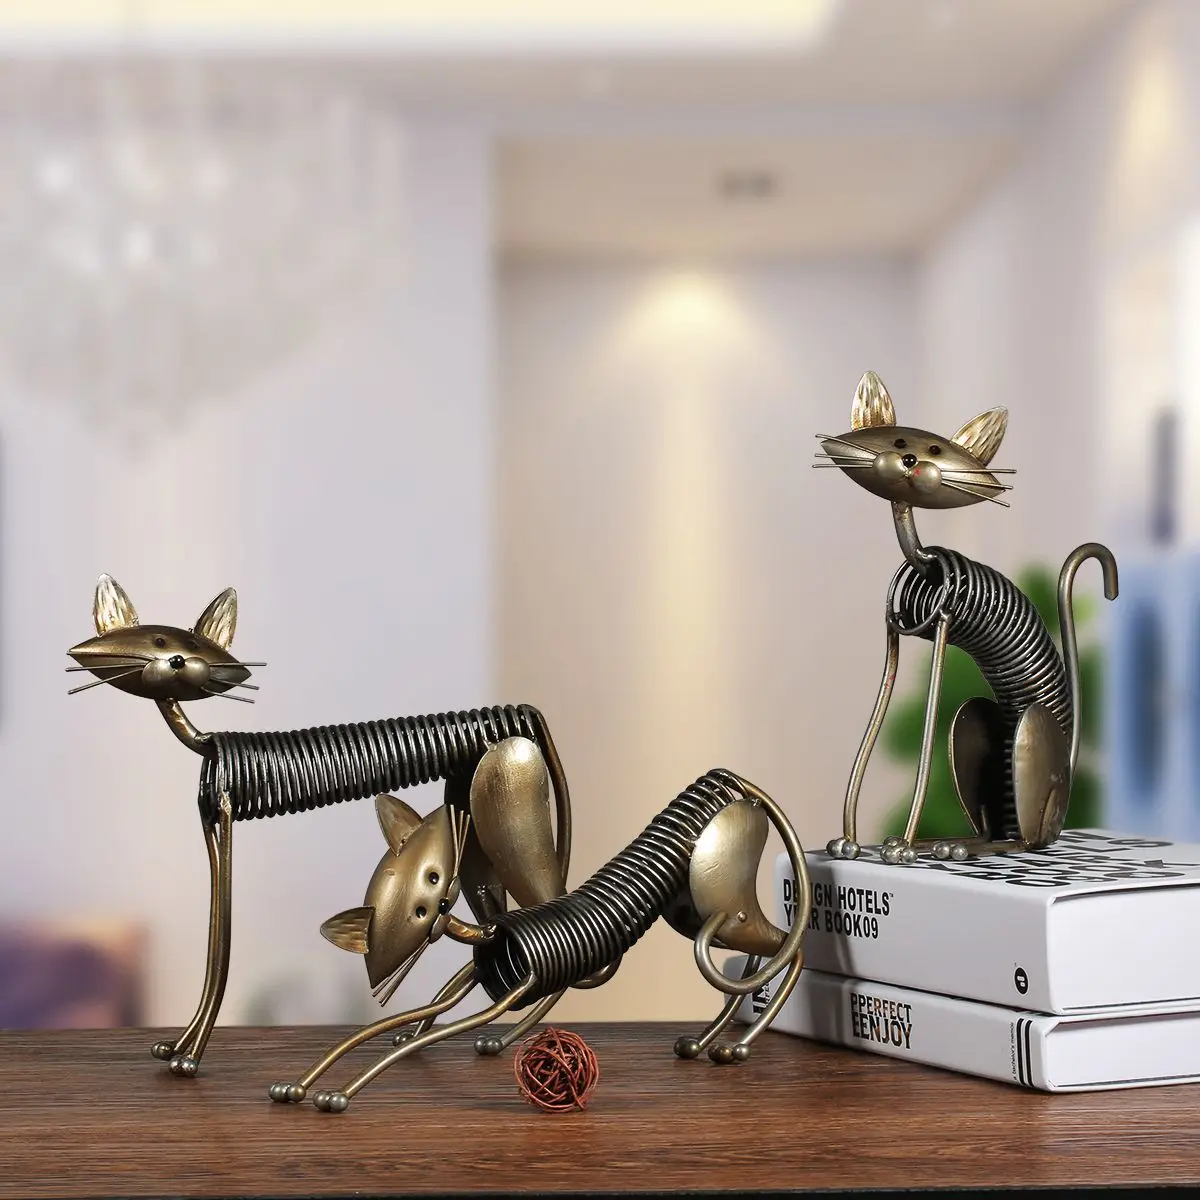 

TOOARTS Metal Sculpture Iron Art Cat Spring made cat Handicraft Crafting Decoration Home Furnishing Ornaments